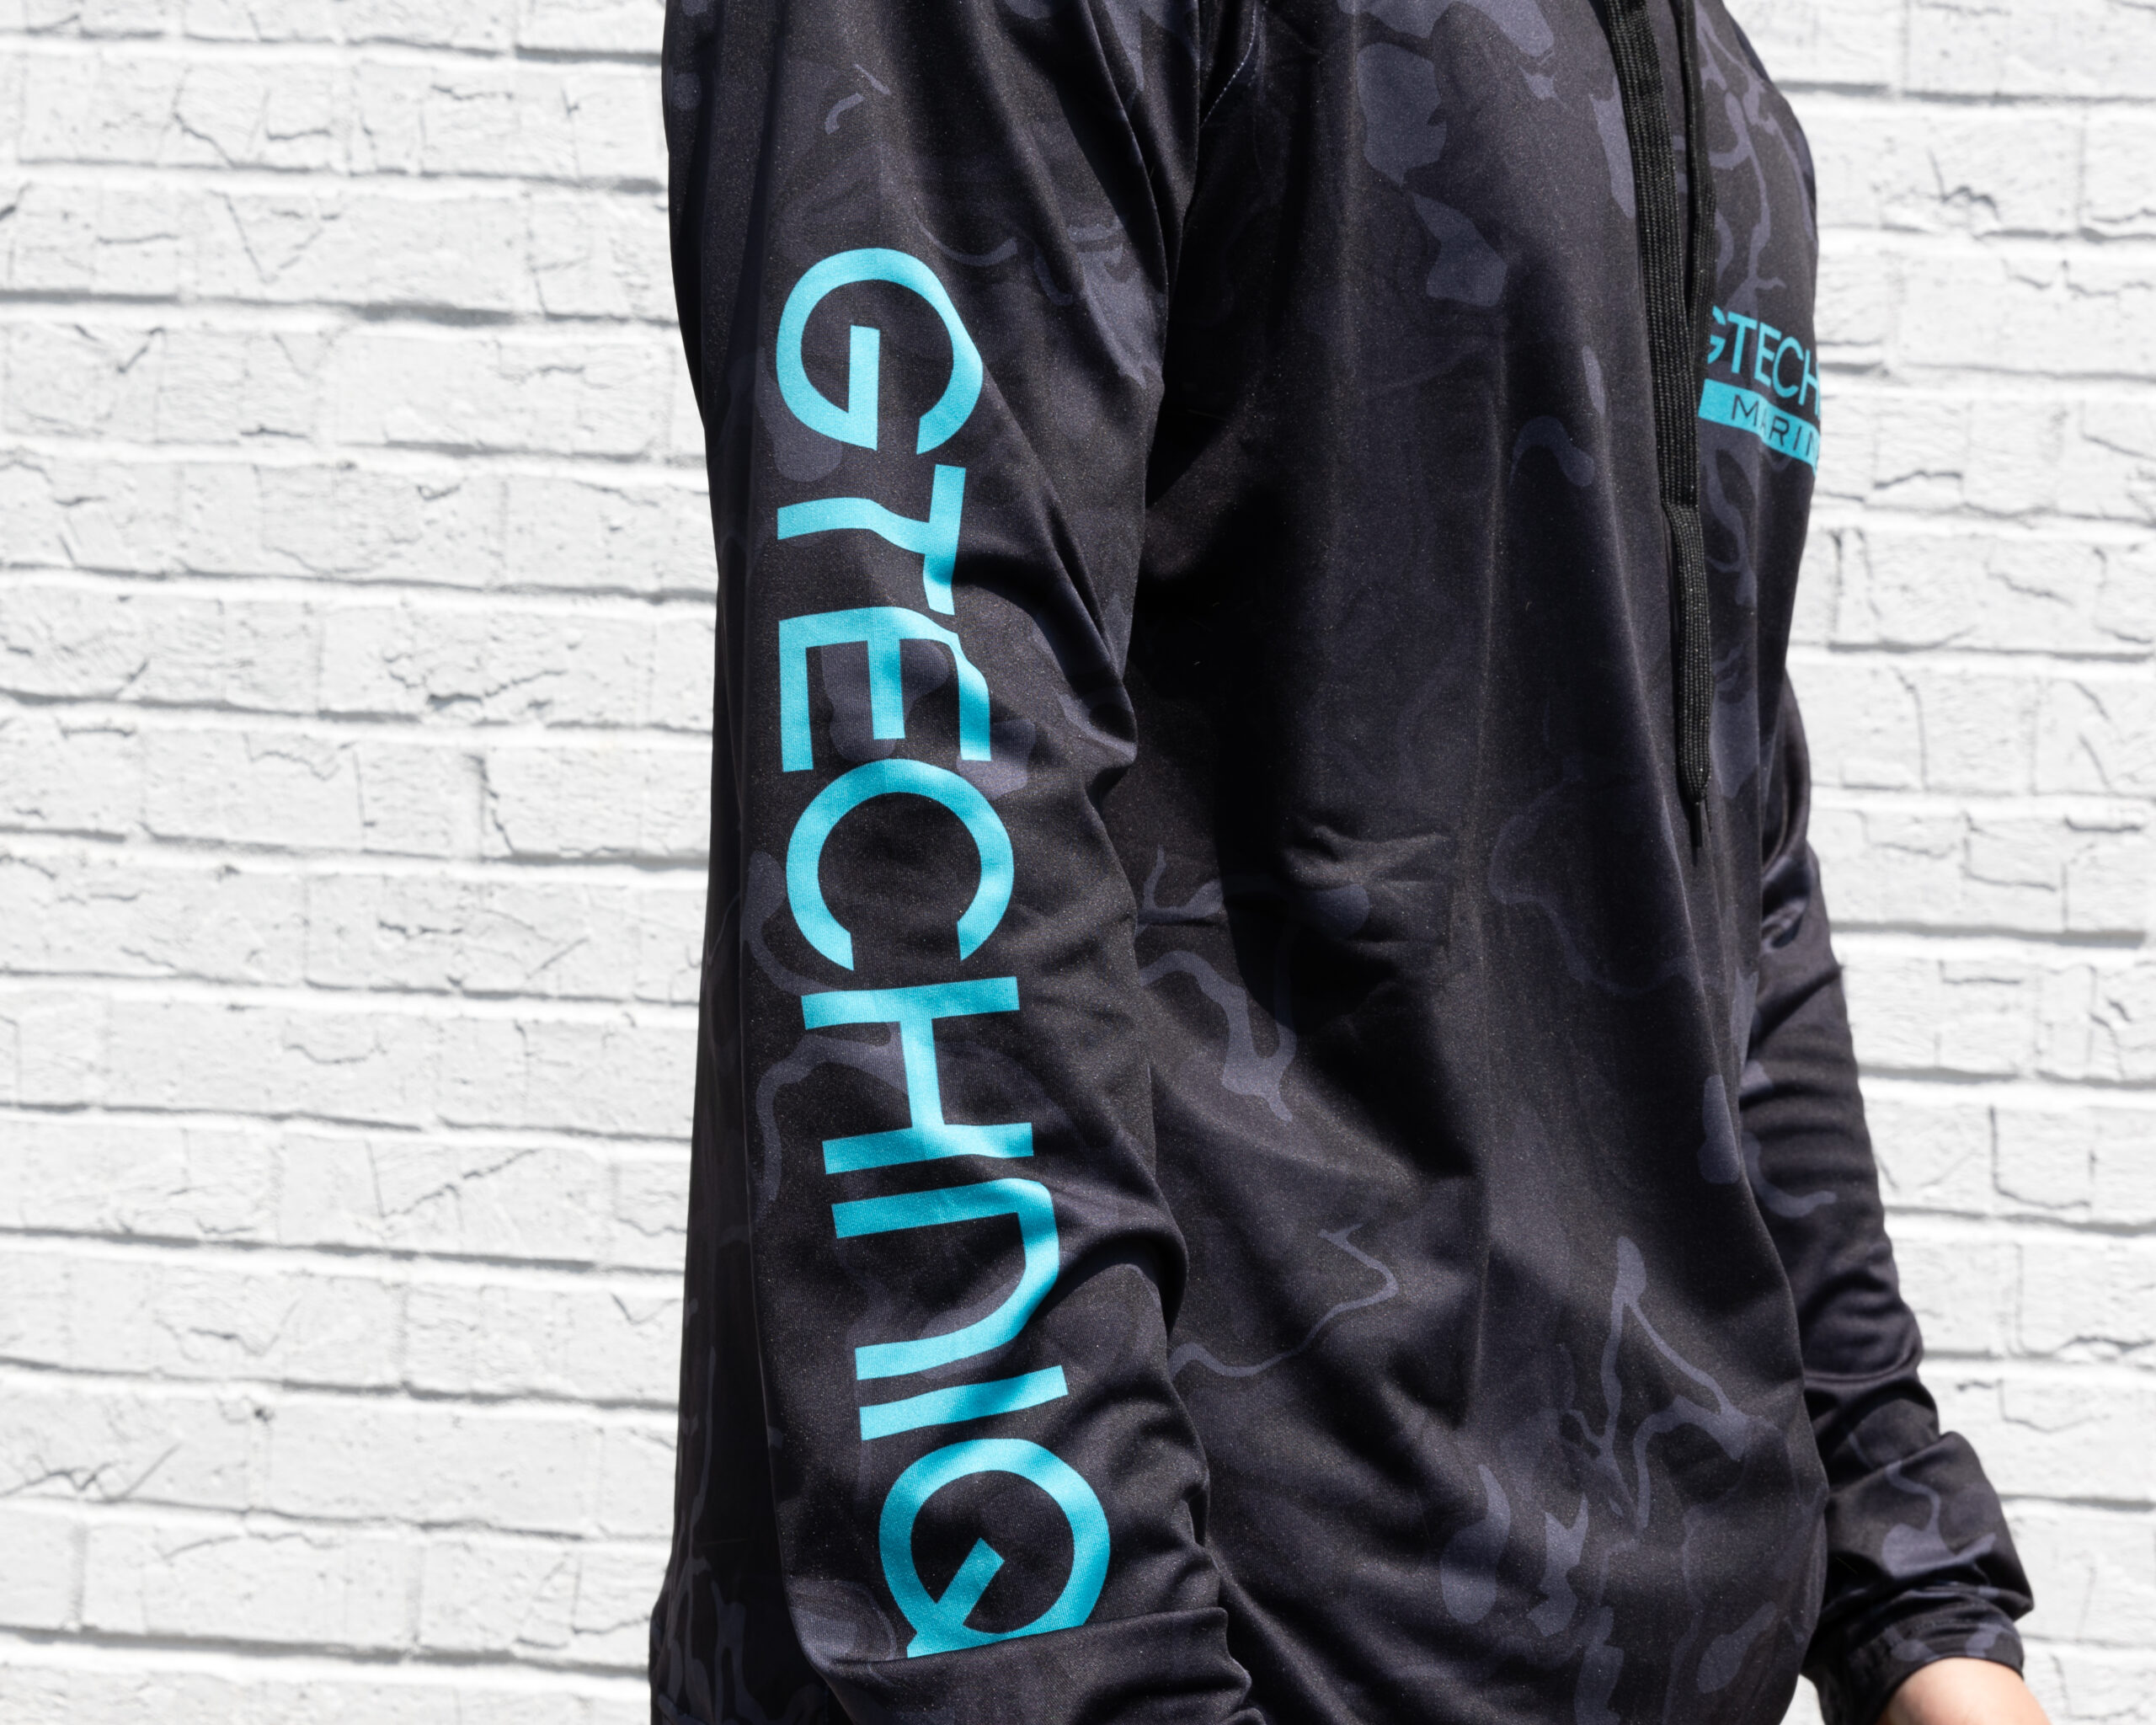 Gtechniq Marine Black Camo Sun Protection Hoodie (T-Shirt Size: S)